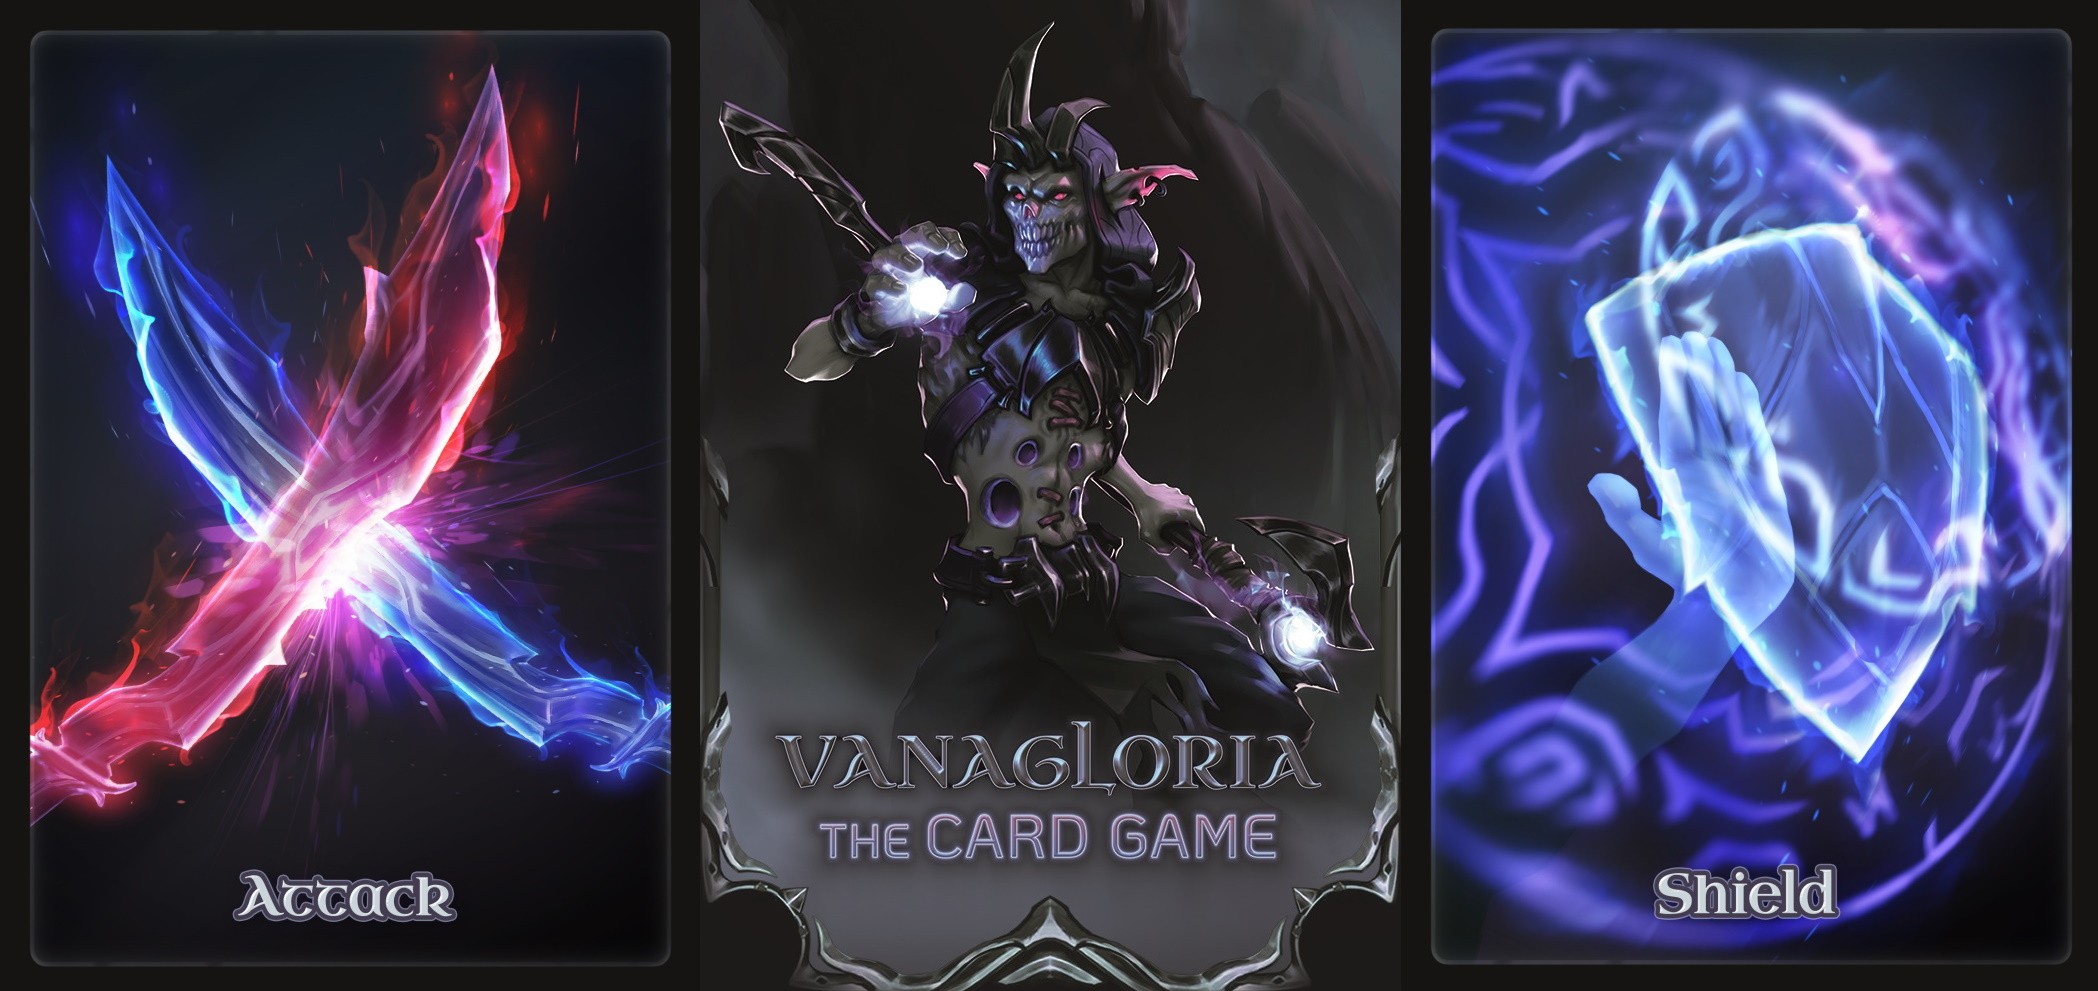 Discover Vanagloria, a card game in the dark sorcerers universe!